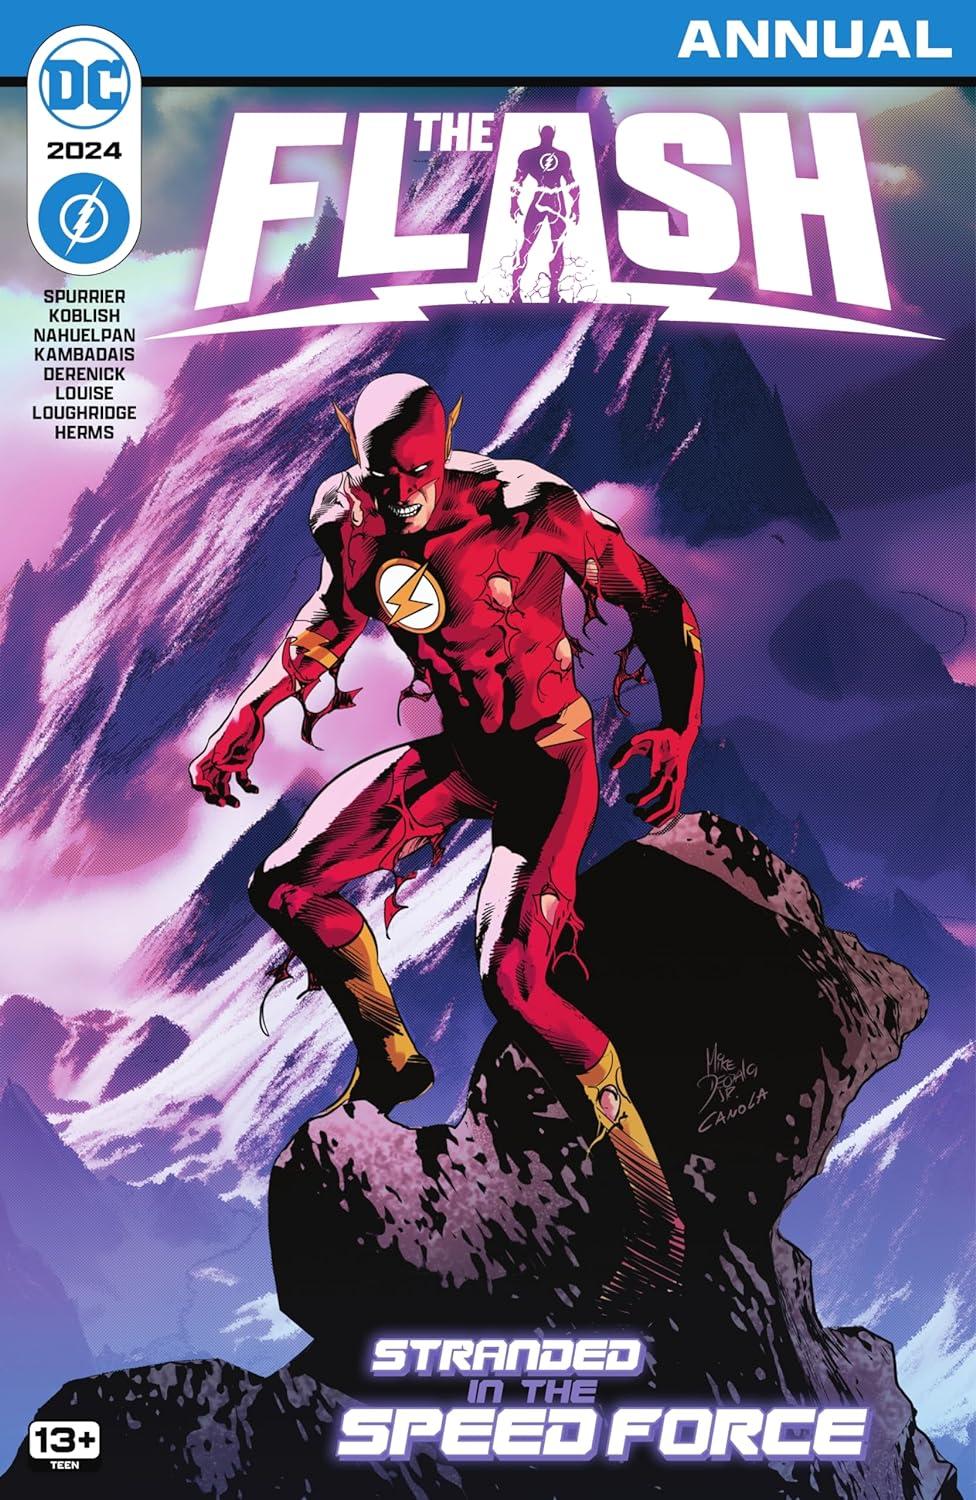 The Flash Annual (2024) #1